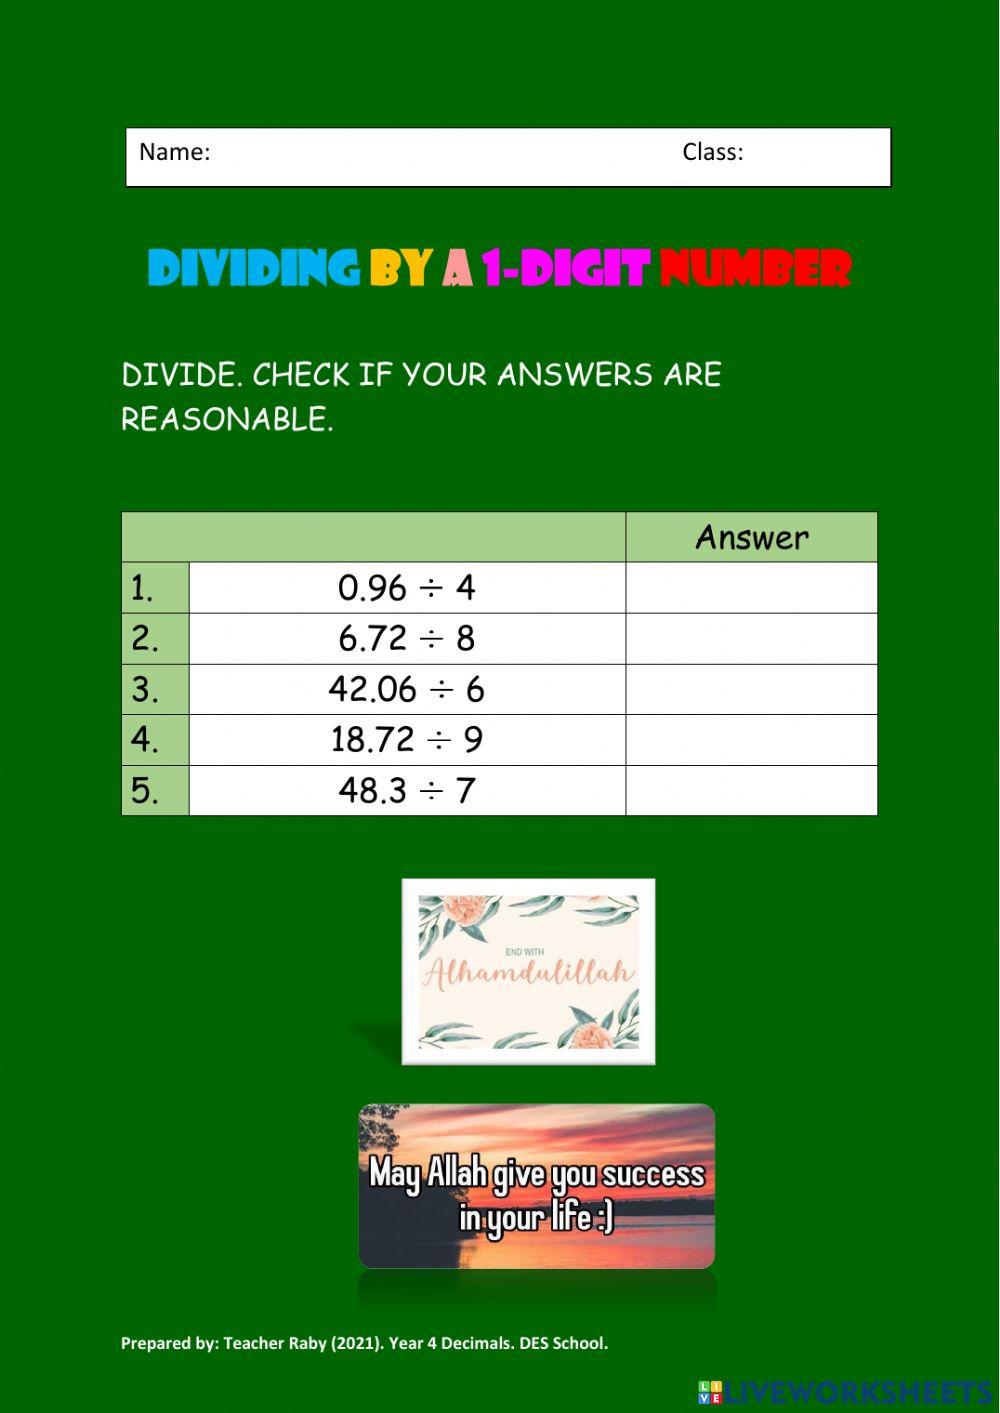 Dividing decimals by a 1-digit number